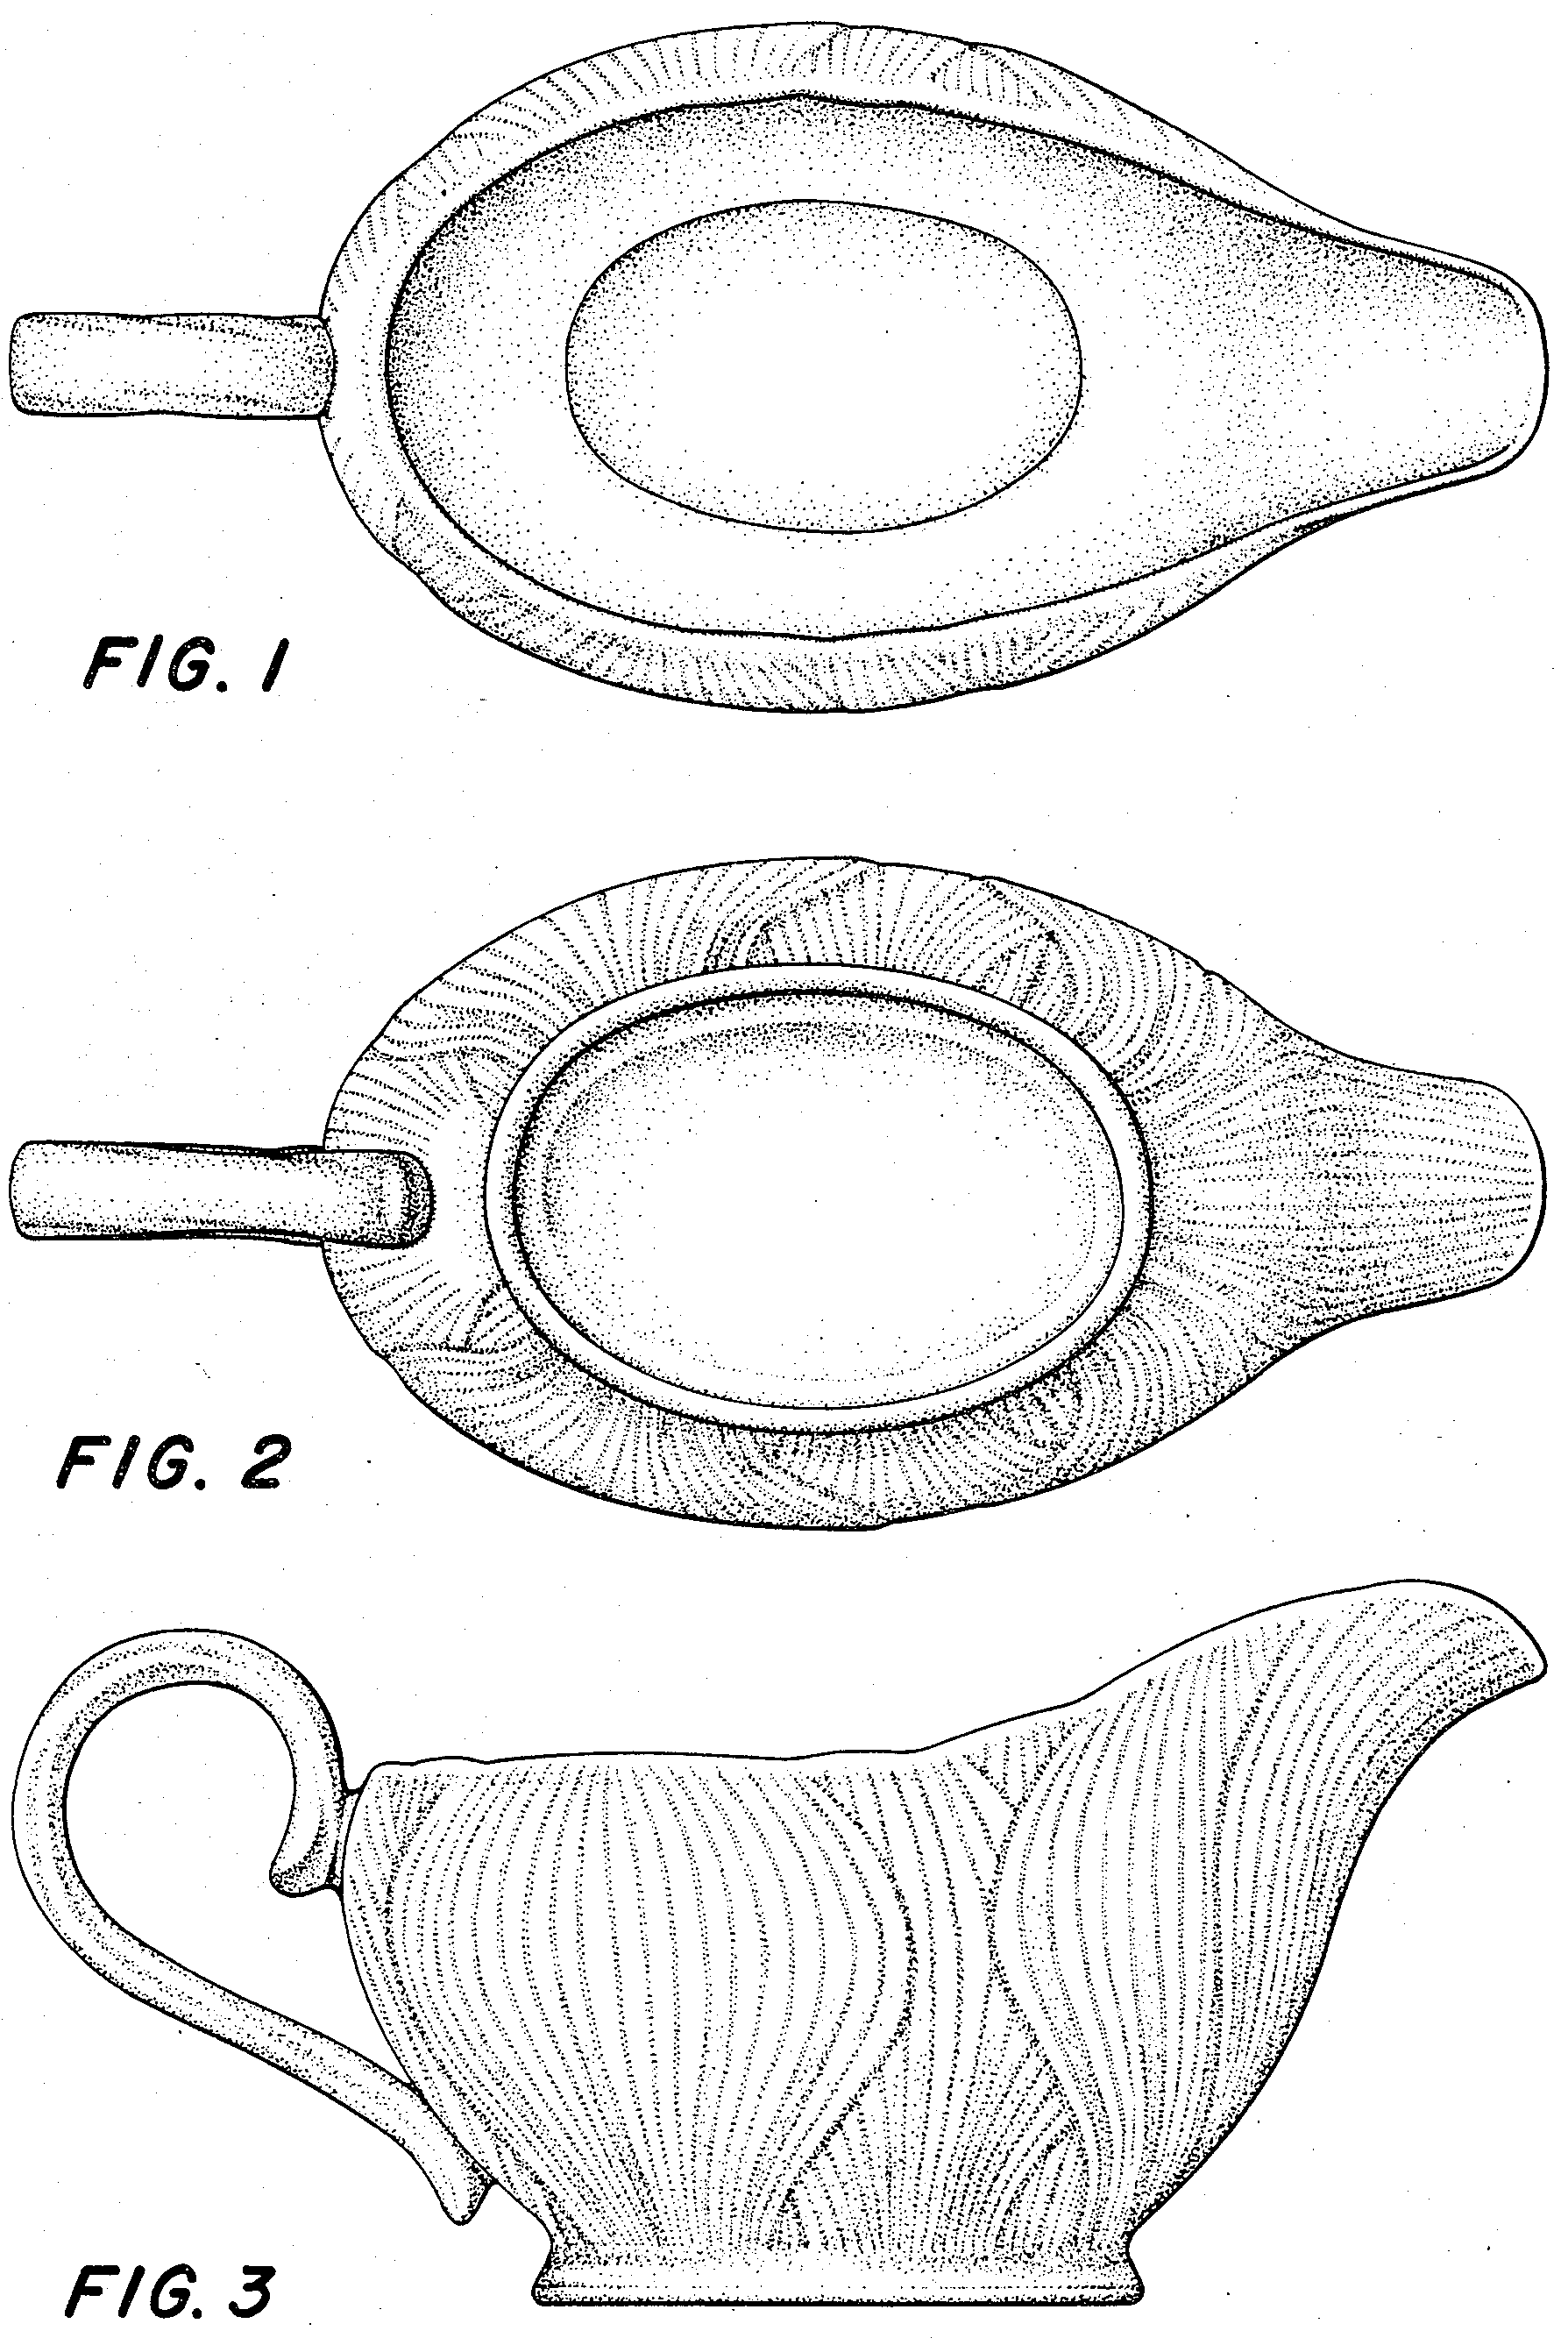 patent illustration for gravy boat